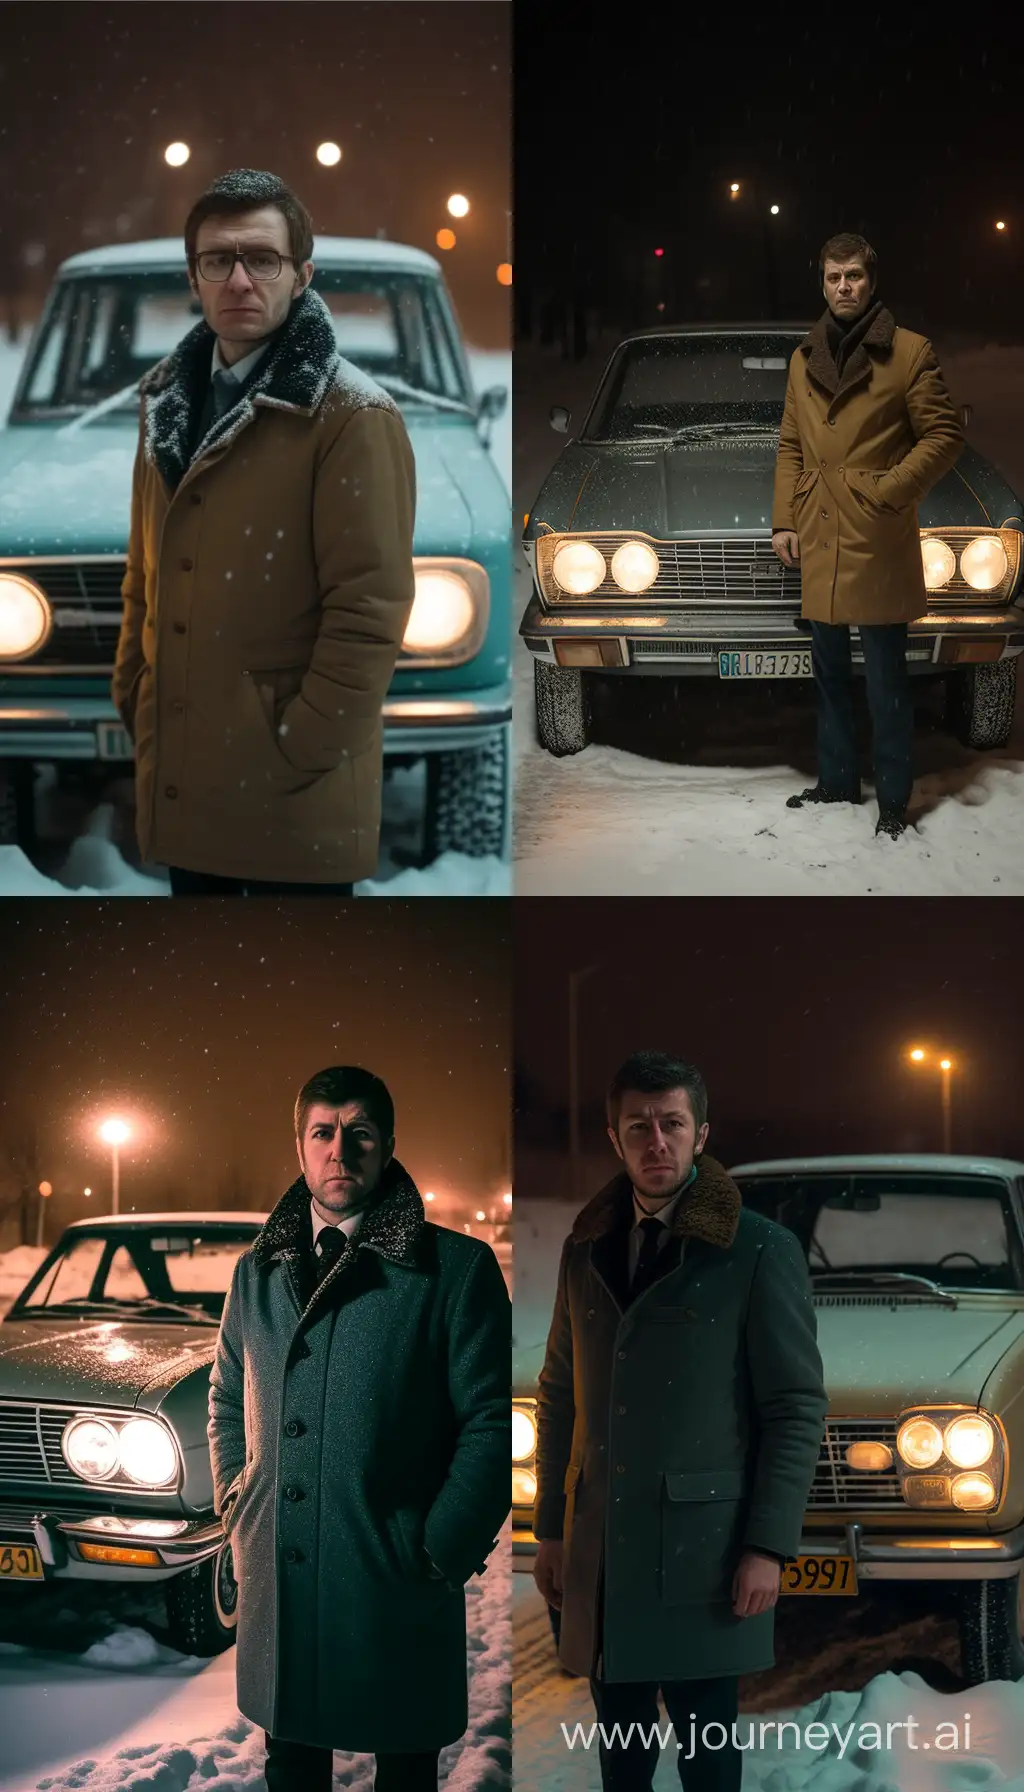 Stylish-Man-with-Vintage-Car-in-Snowy-USSR-Winter-Night